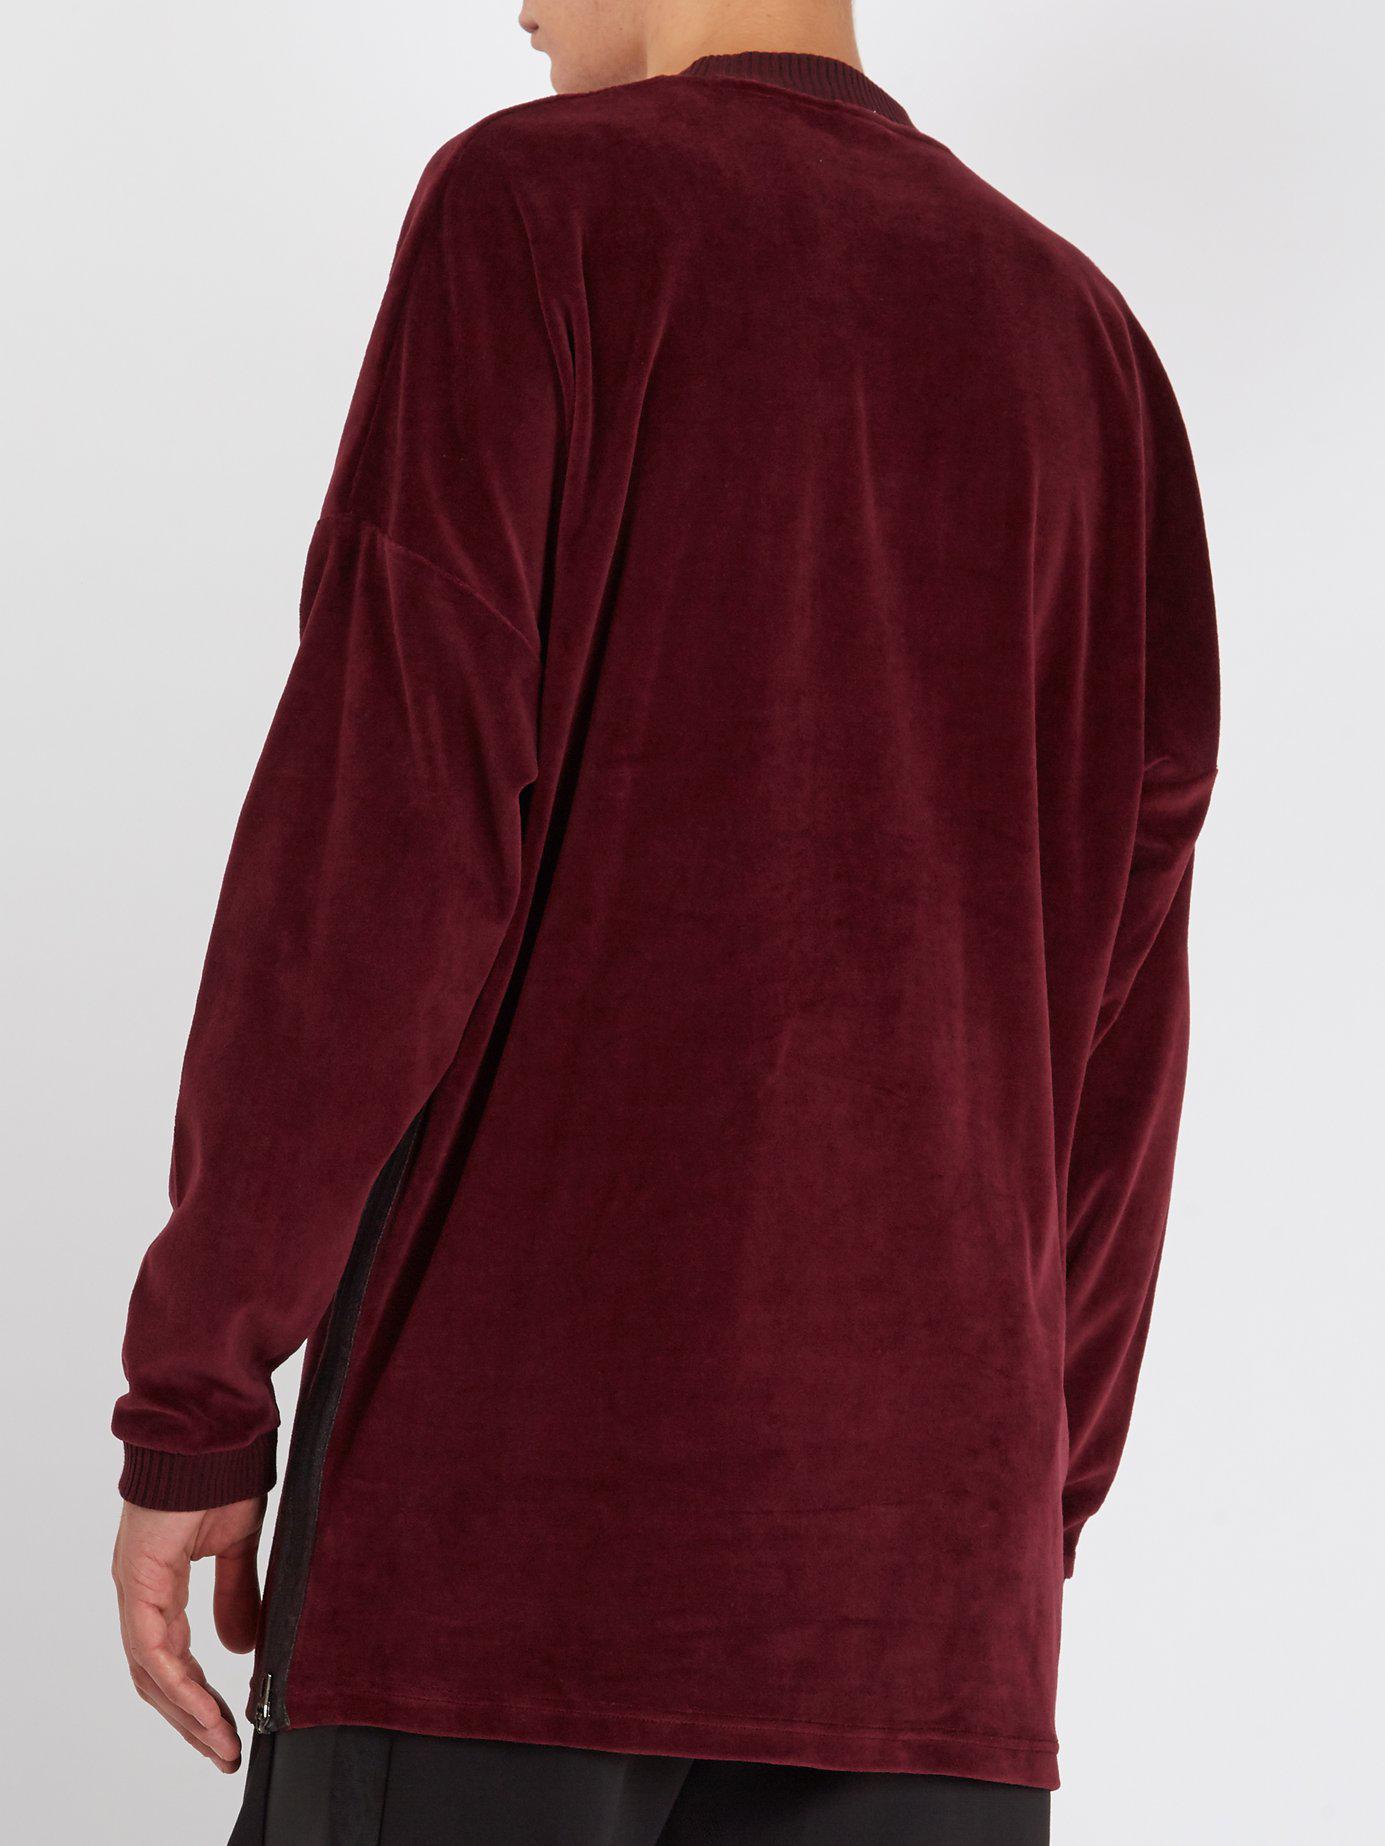 adidas Originals Long Sleeve Velvet Sweater in Burgundy (Purple) for Men |  Lyst